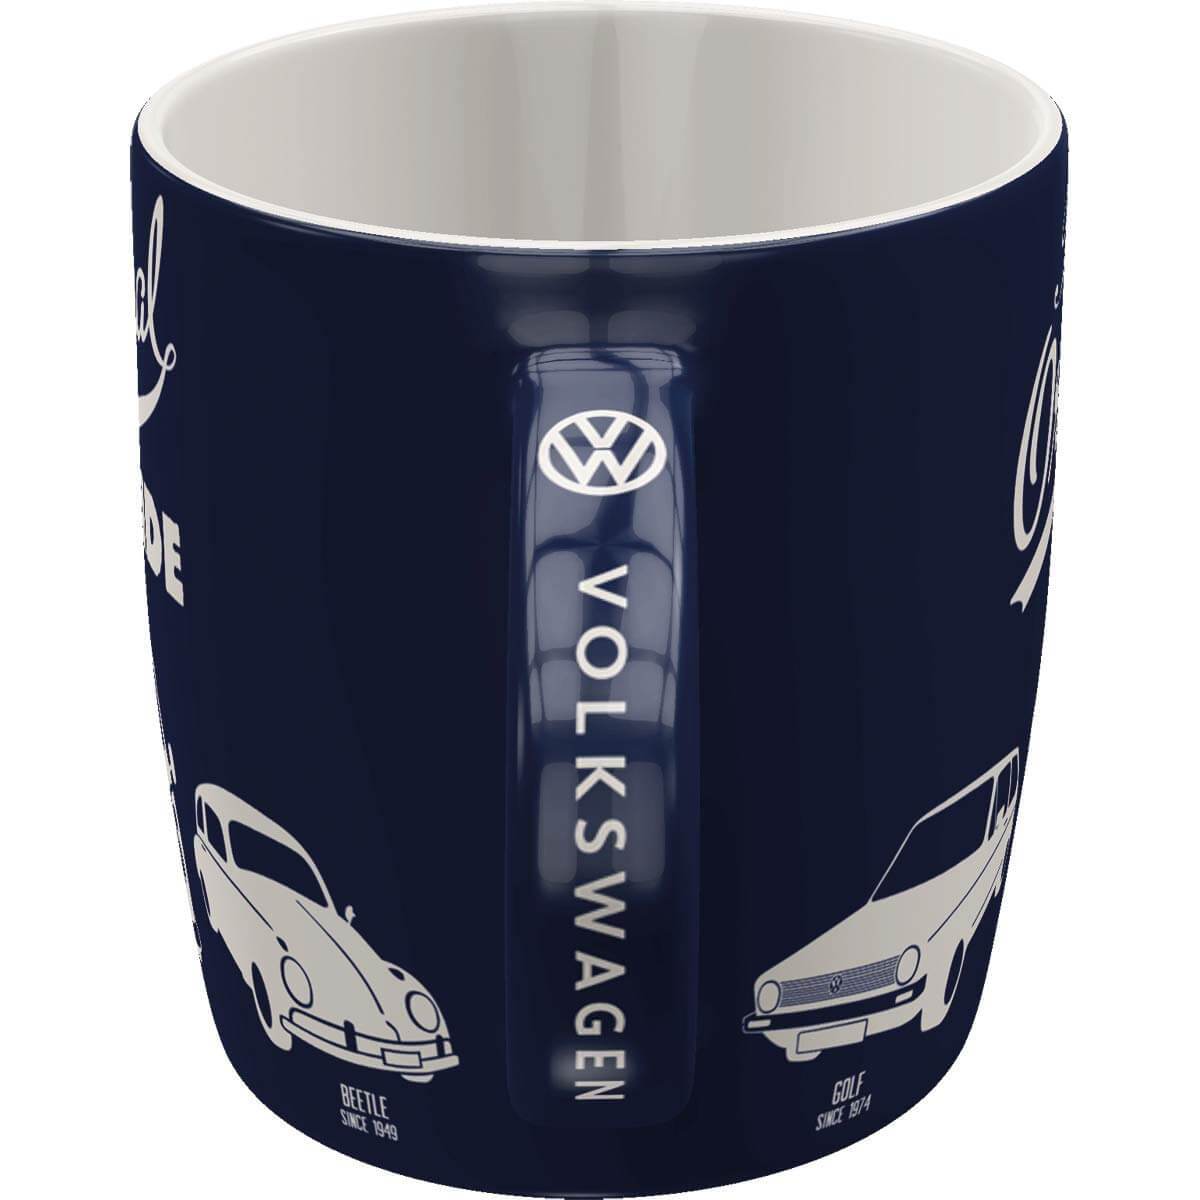 Volkswagen VW Original Ride Campervan, Beetle & Golf Ceramic Mug